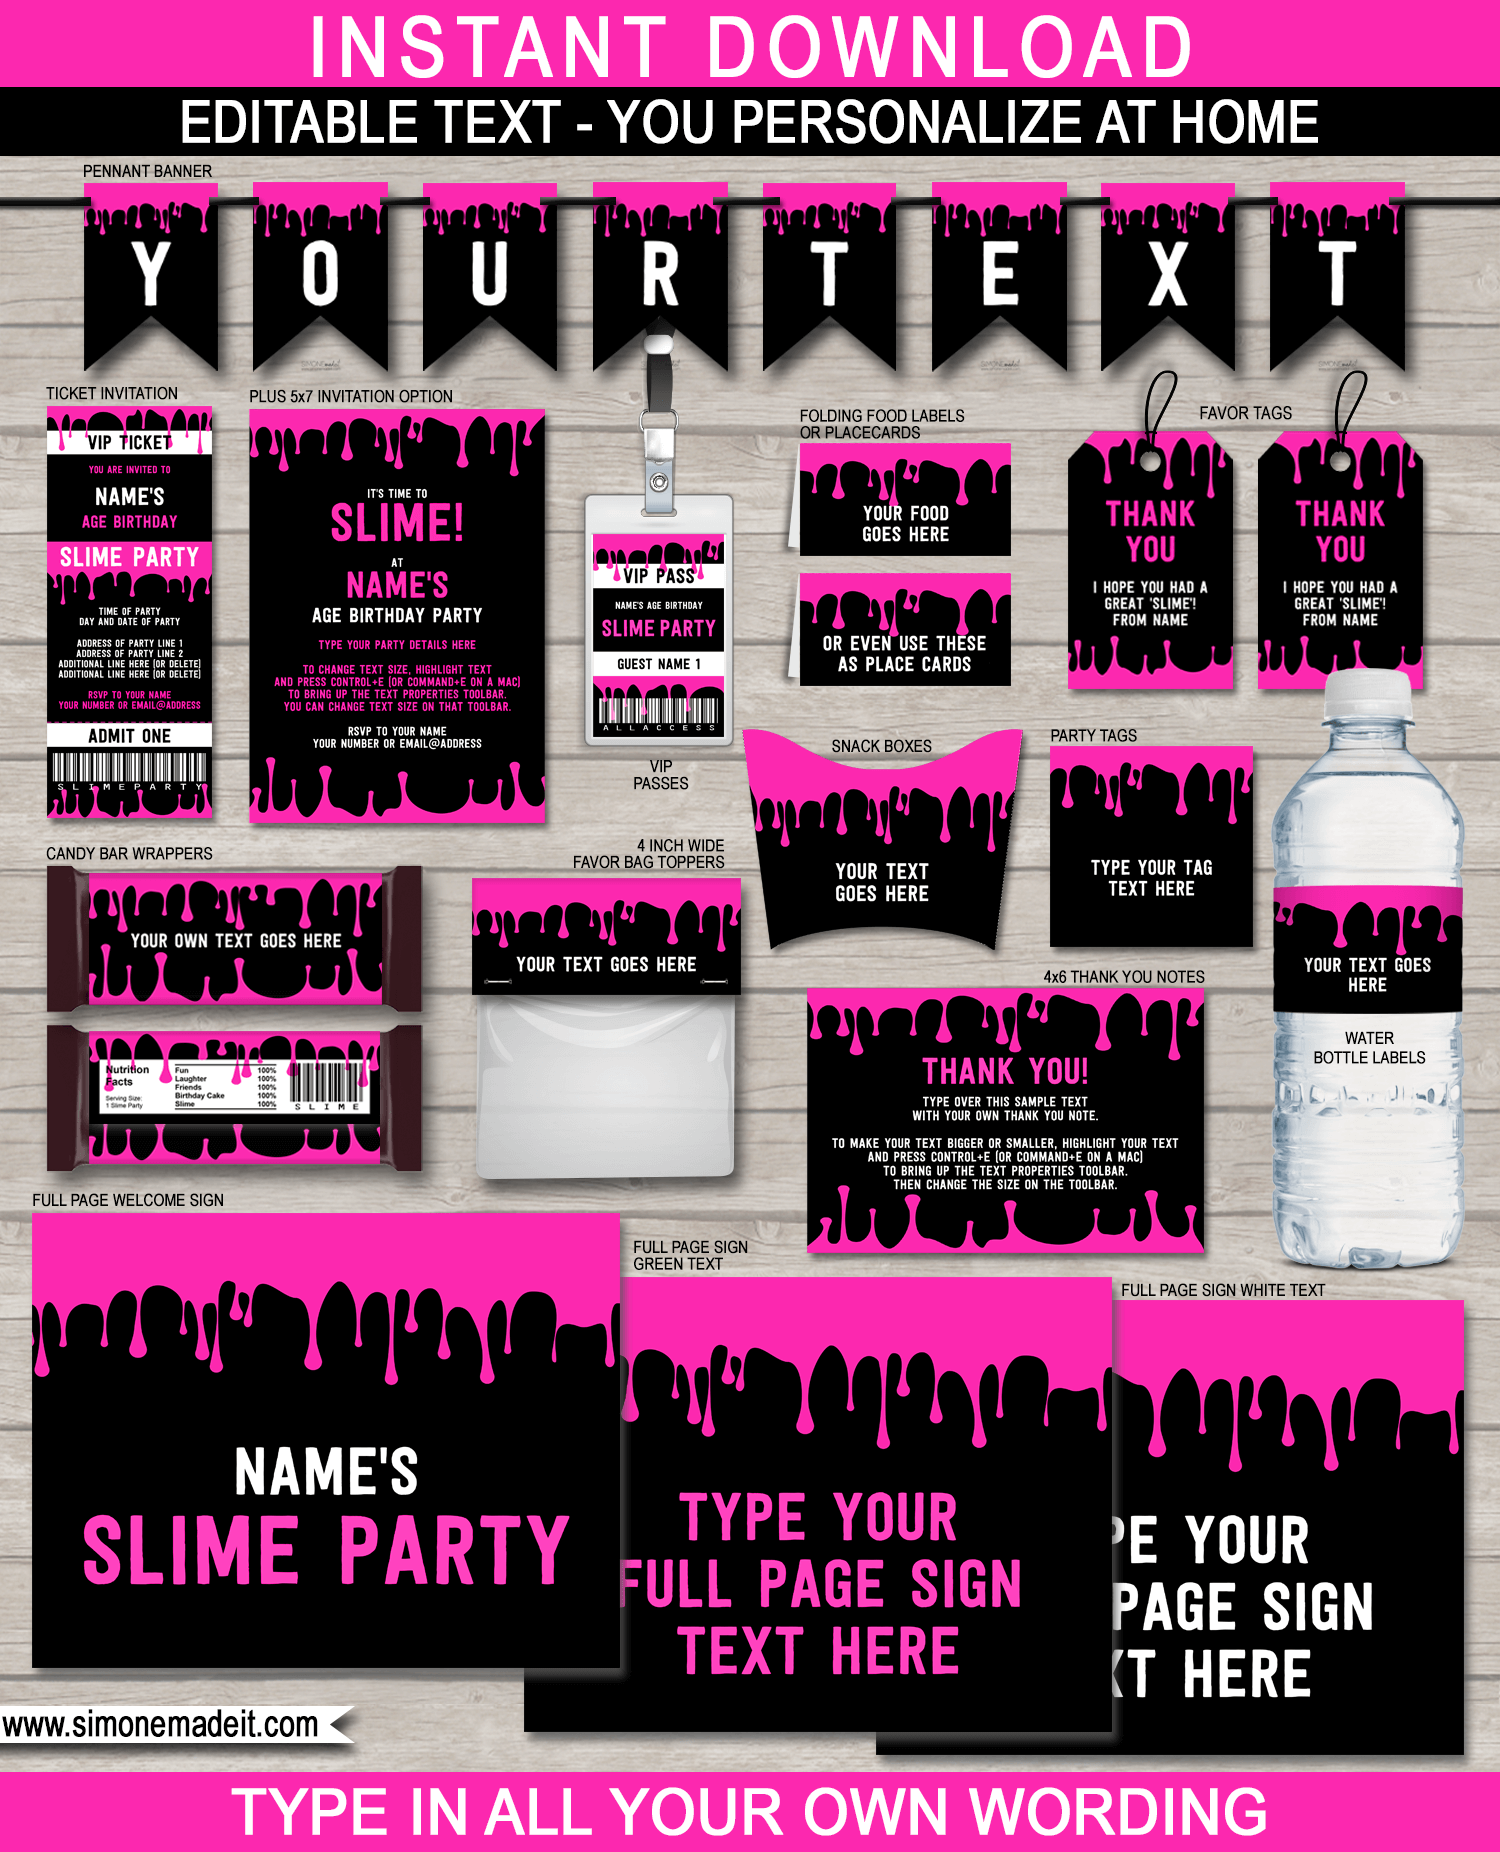 Slime Theme Birthday Party Printables, Invitations & Decorations - Slime Theme Party - Editable & Printable DIY templates - INSTANT DOWNLOAD via simonemadeit.com